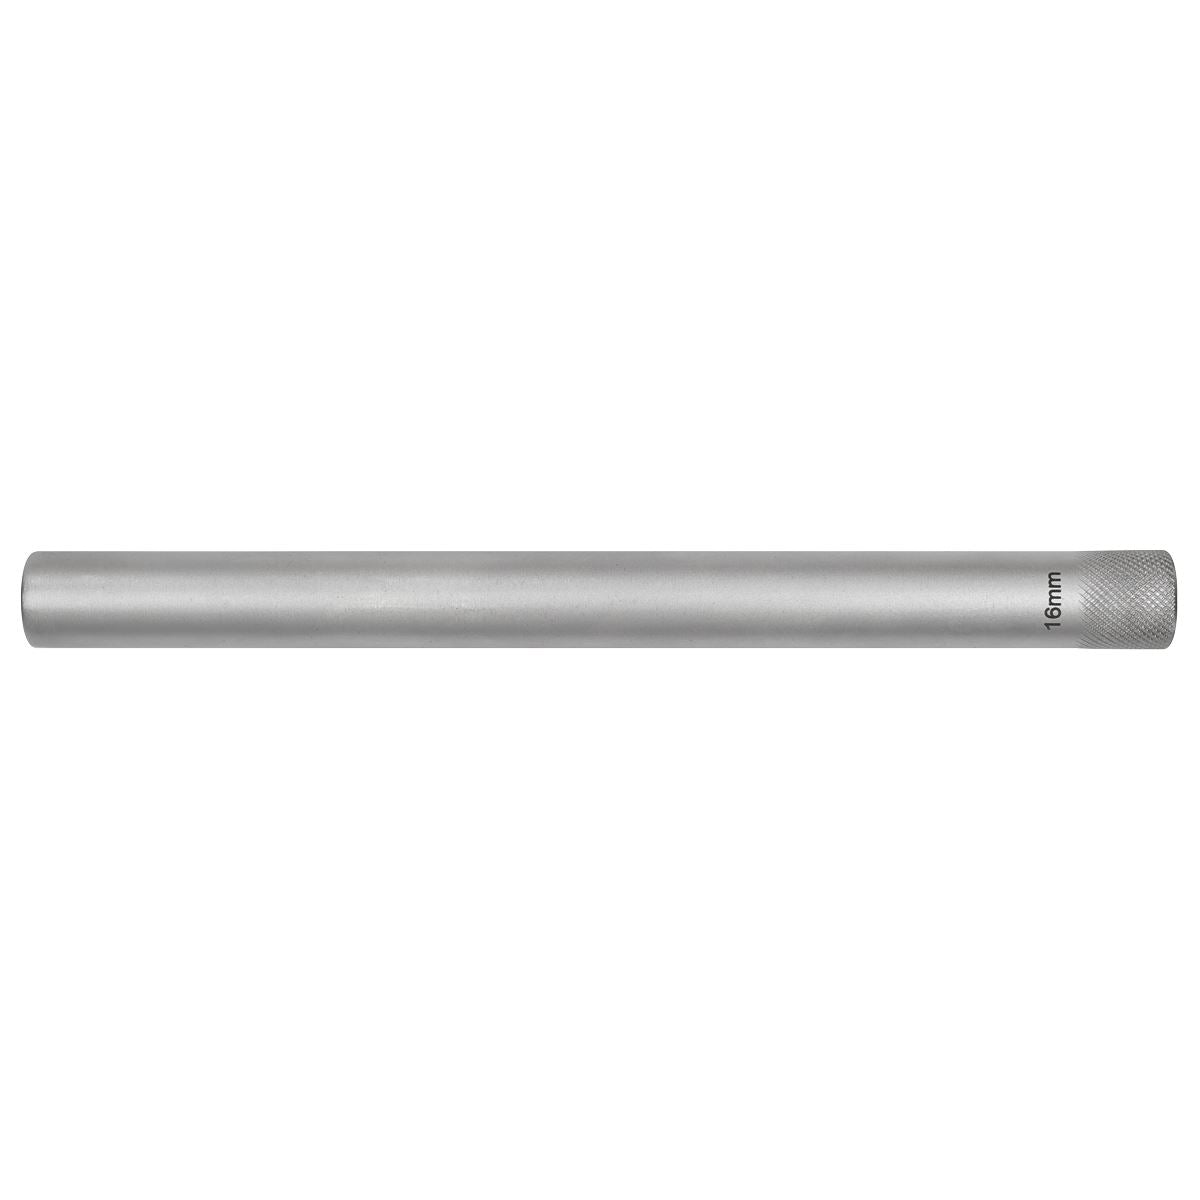 Sealey Spark Plug Socket 16mm 3/8"Sq 12-Point Magnetic Drive 250mm Long